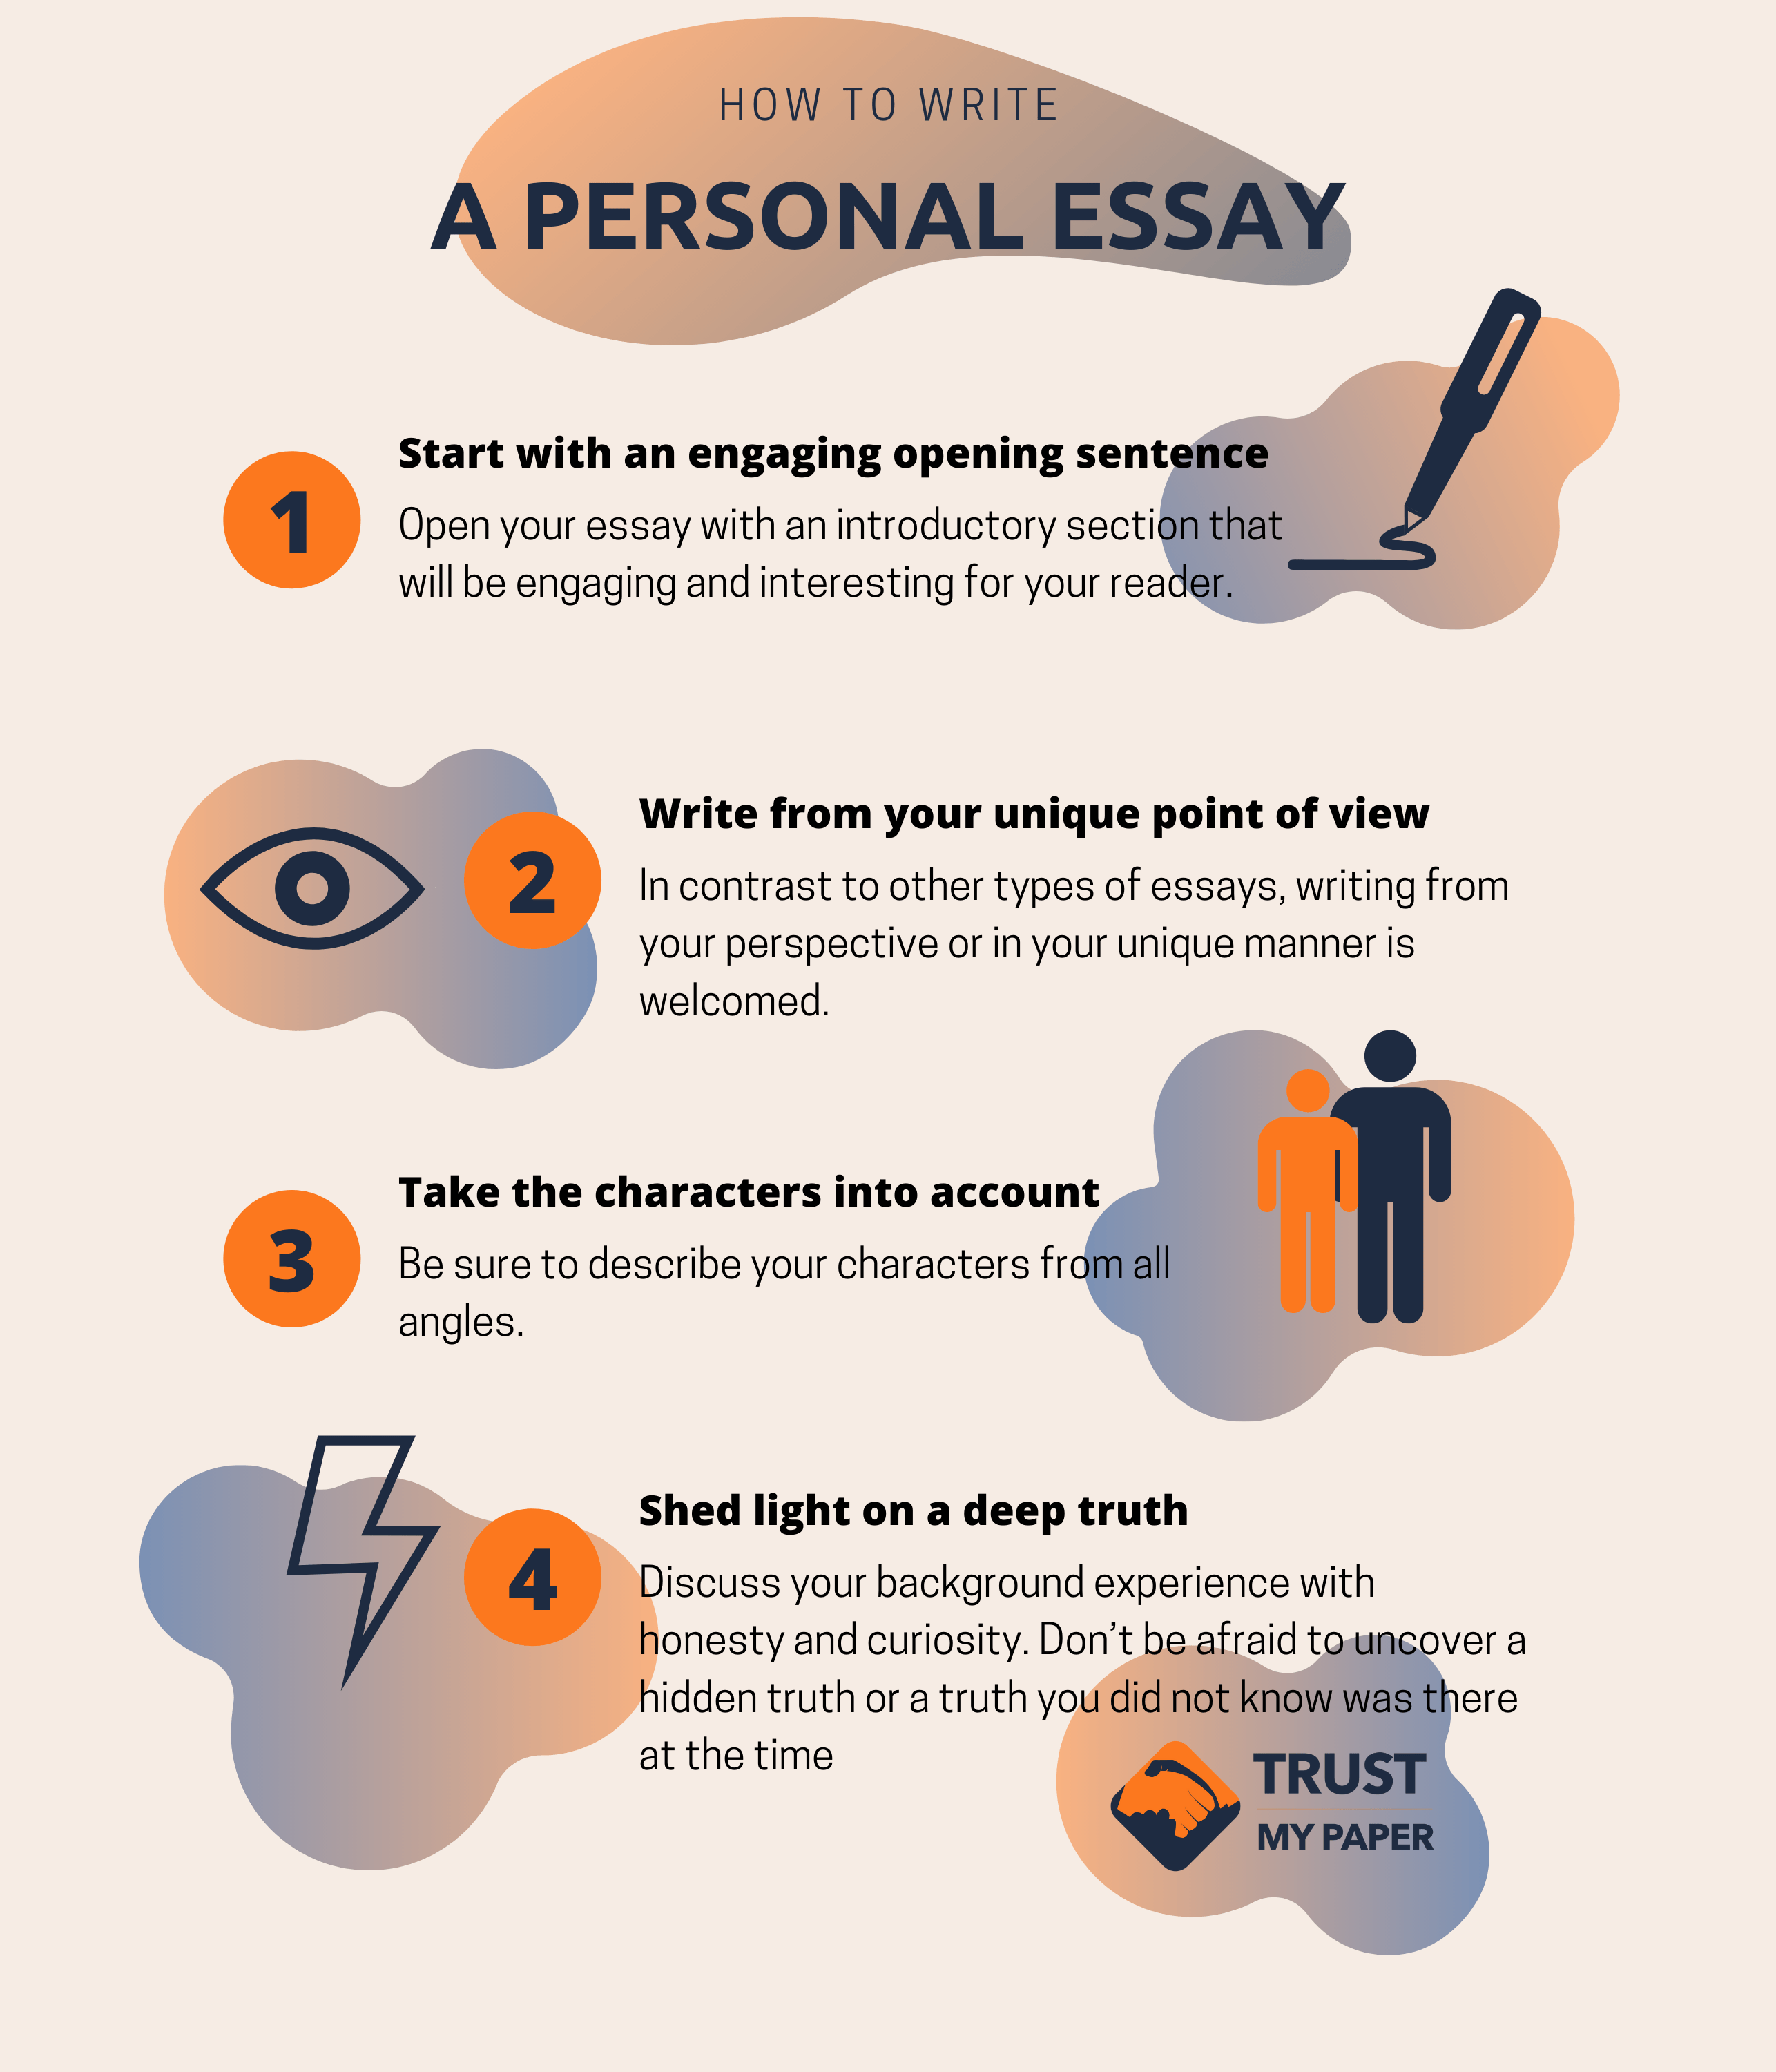 personal essay tips reddit